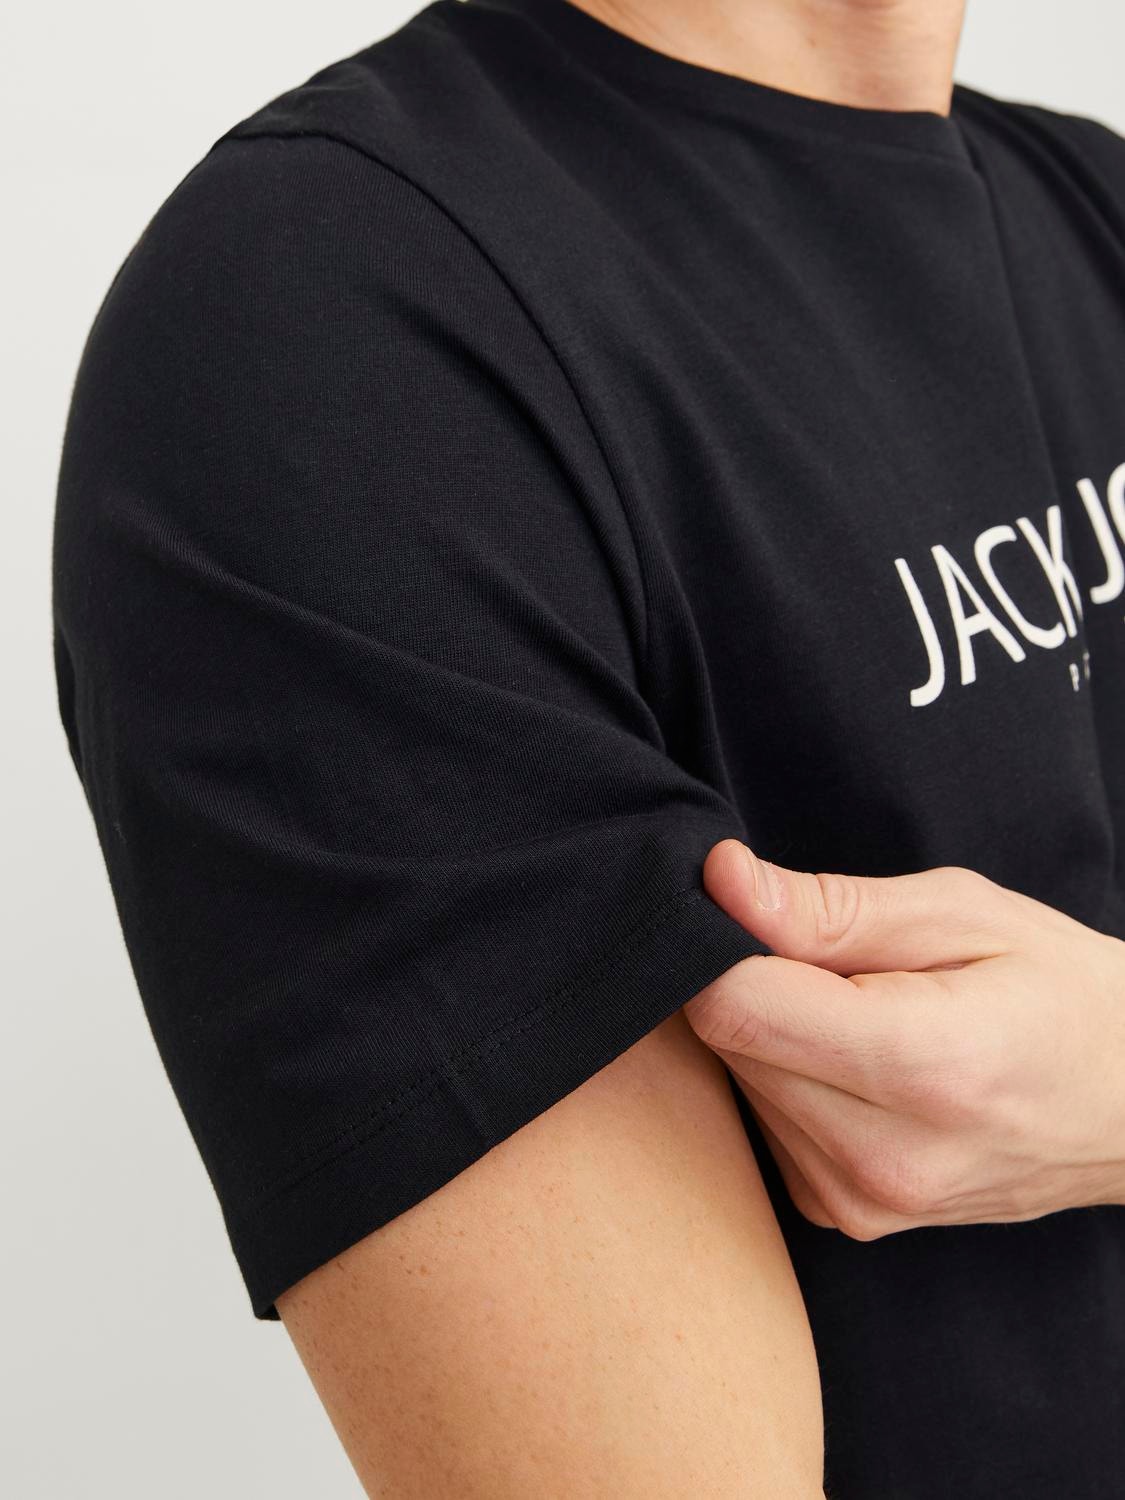 Jack & Jones Logo Rundhals T-shirt -Black Onyx - 12256971